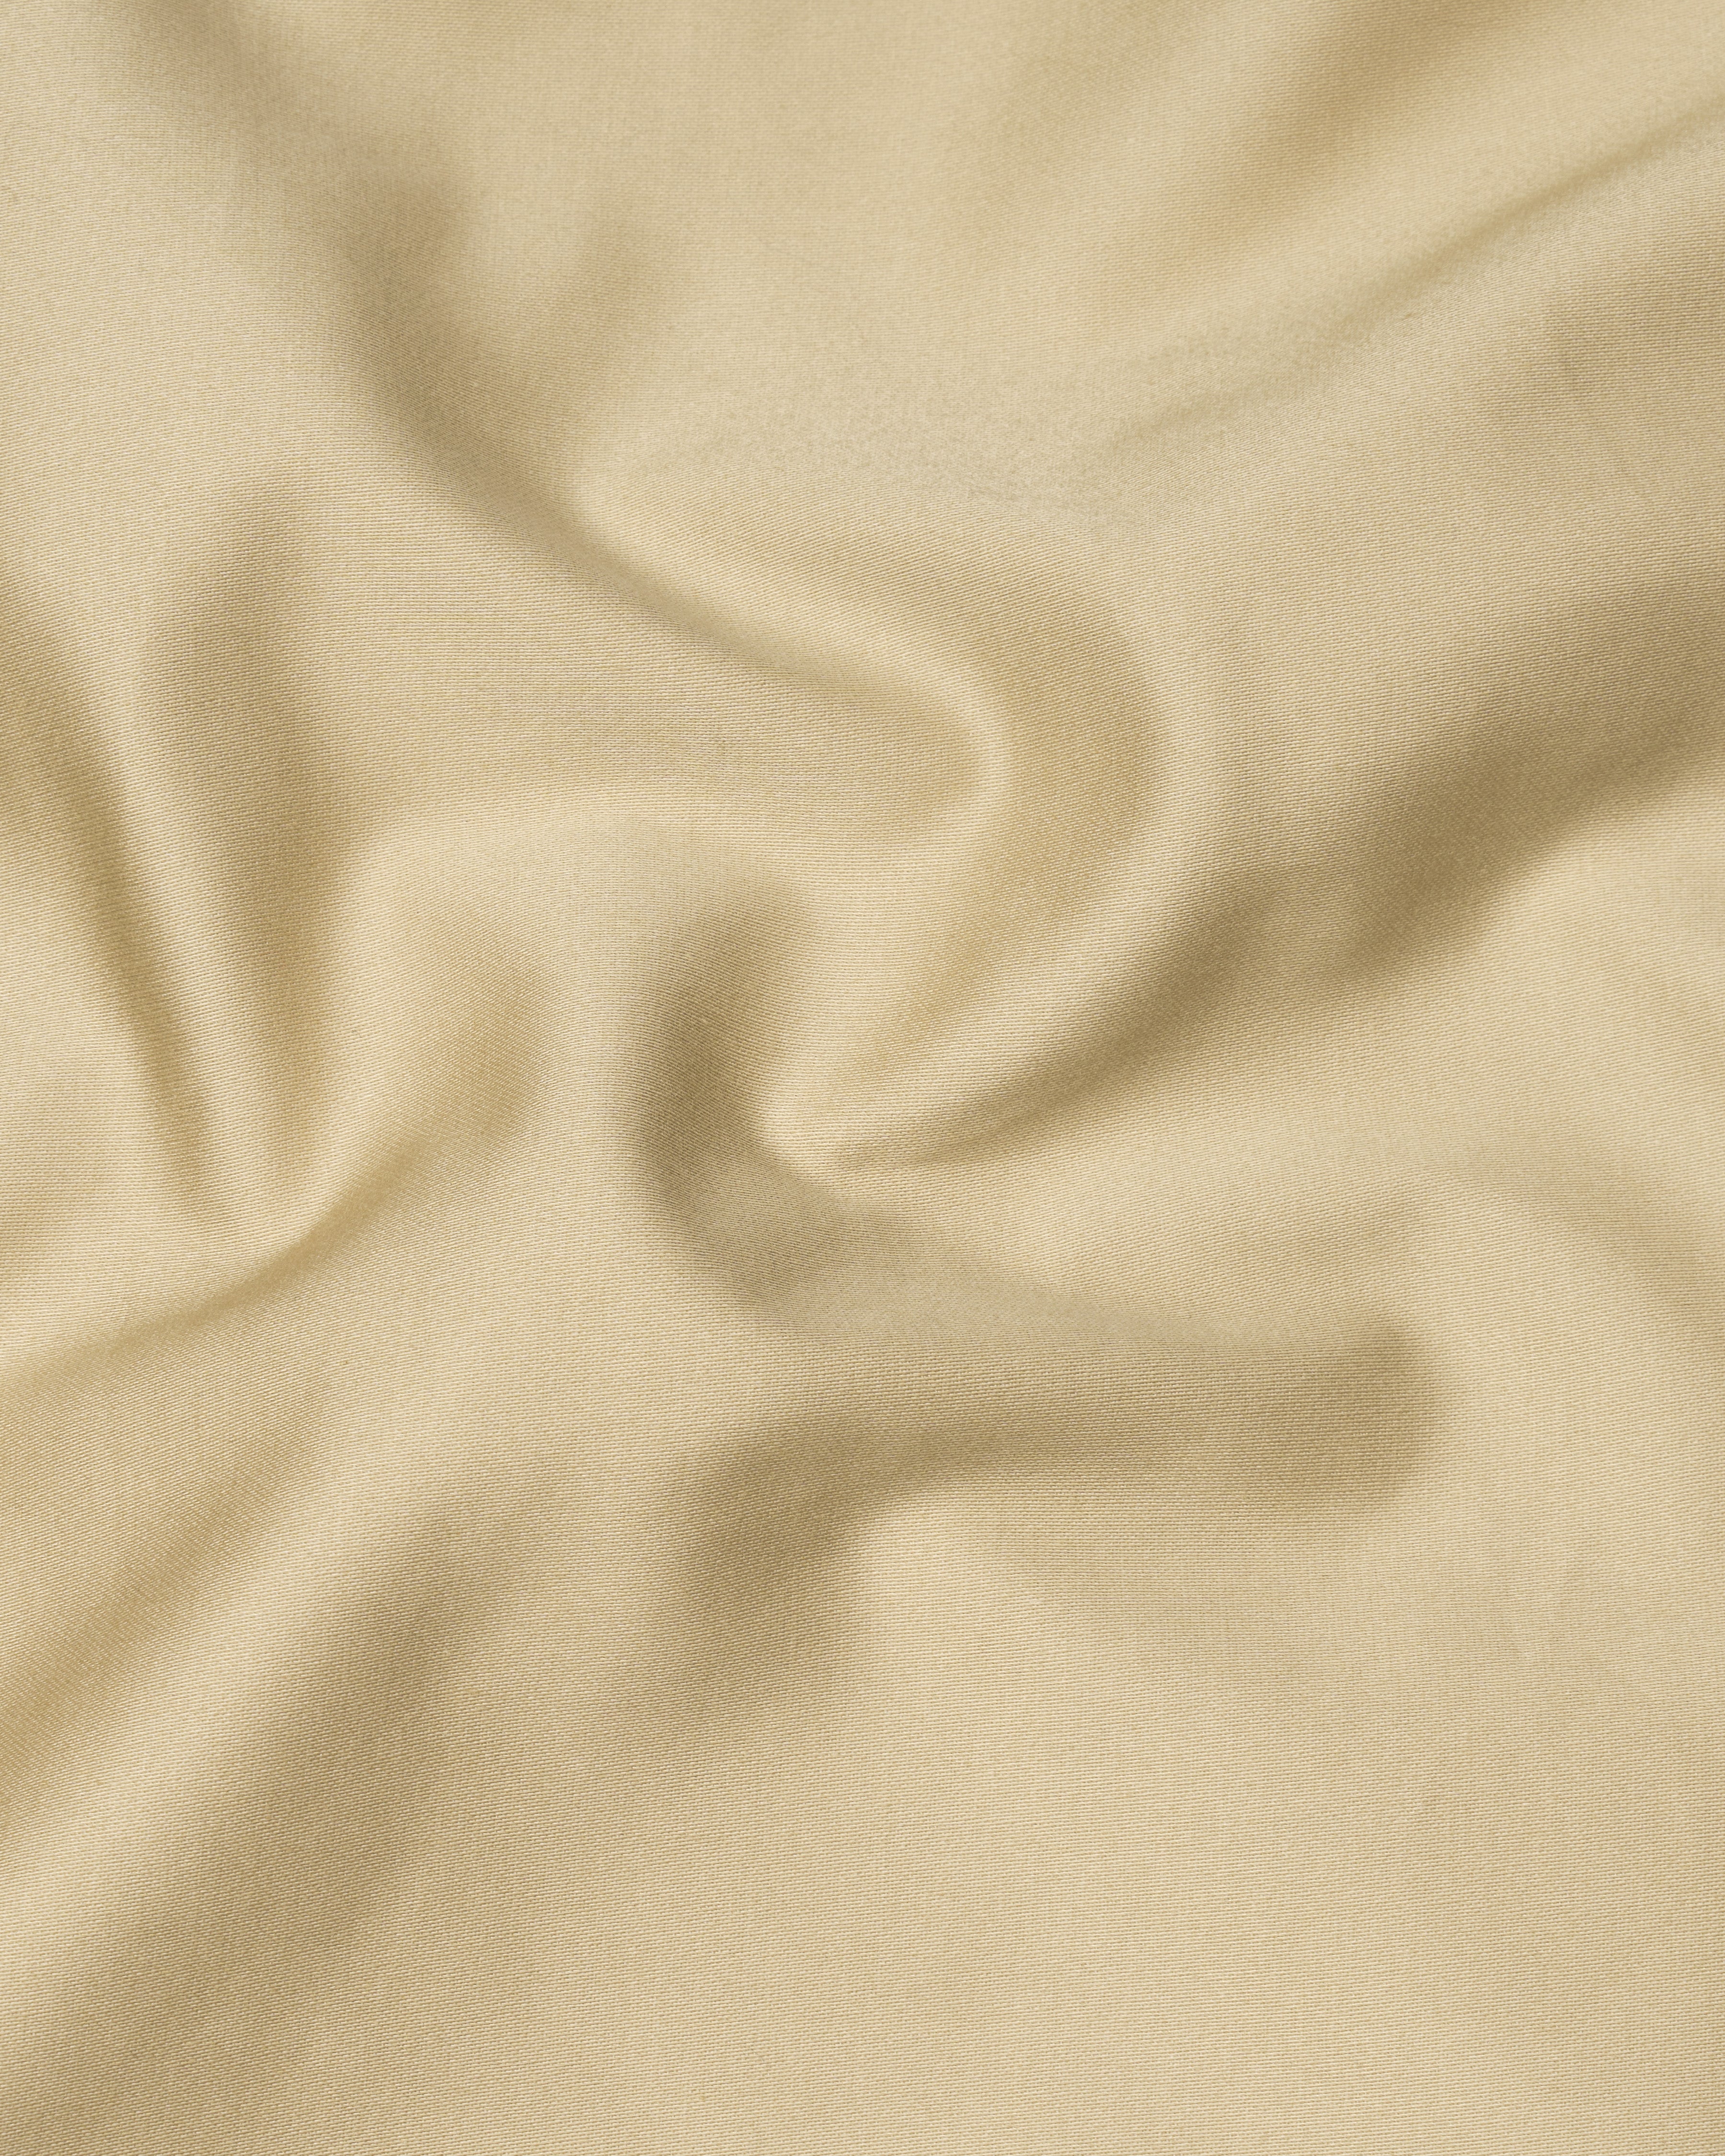 Pavlova Cream Plain-Solid Premium Cotton Single Breasted Suits for